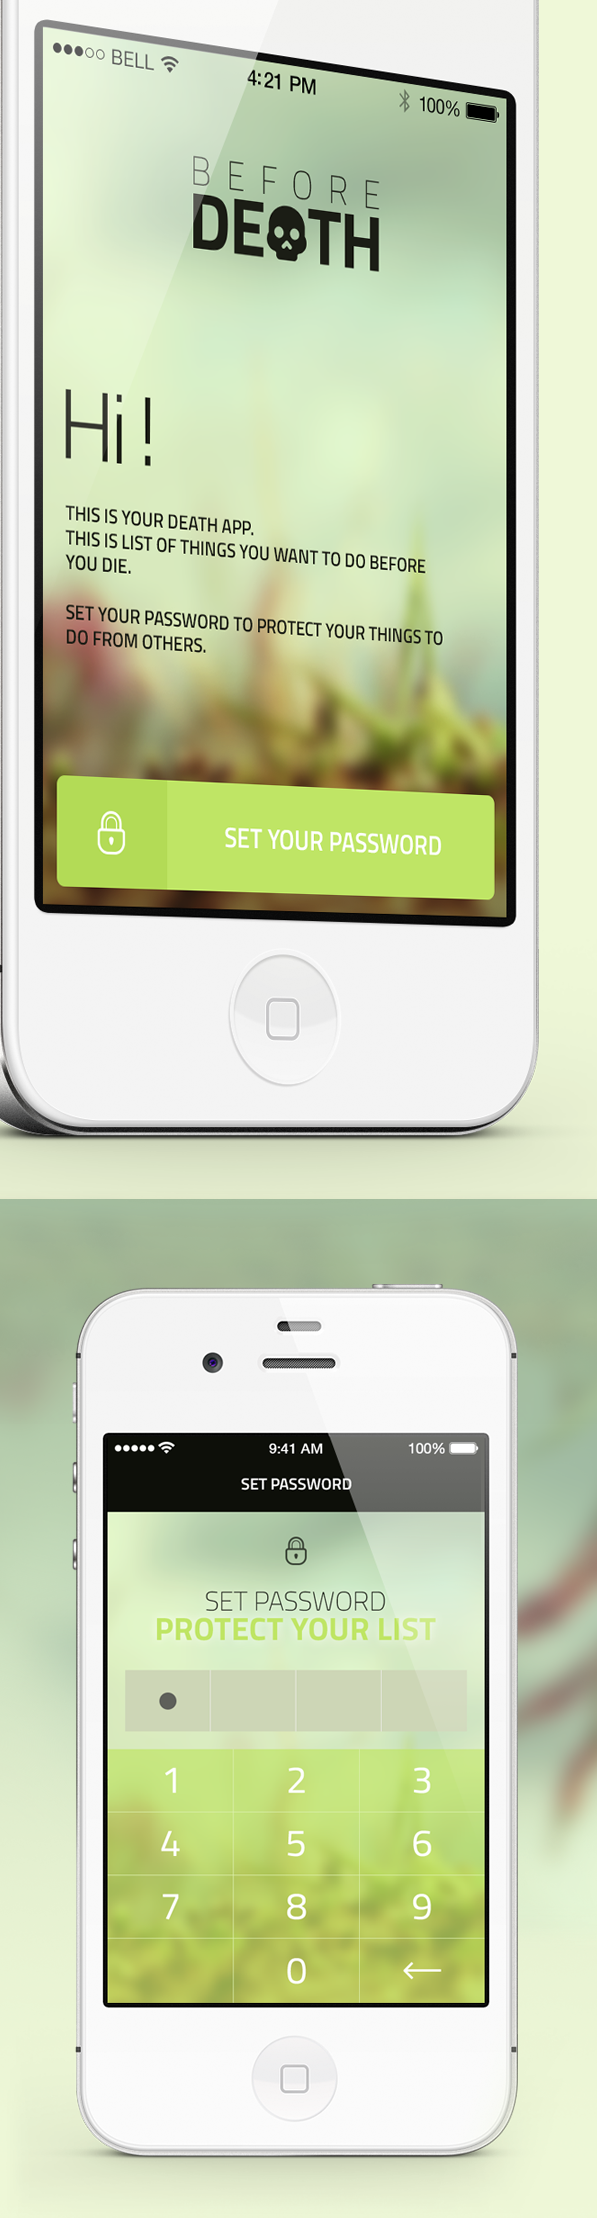 iphone app ios apple design UI radziu user interface application mobile